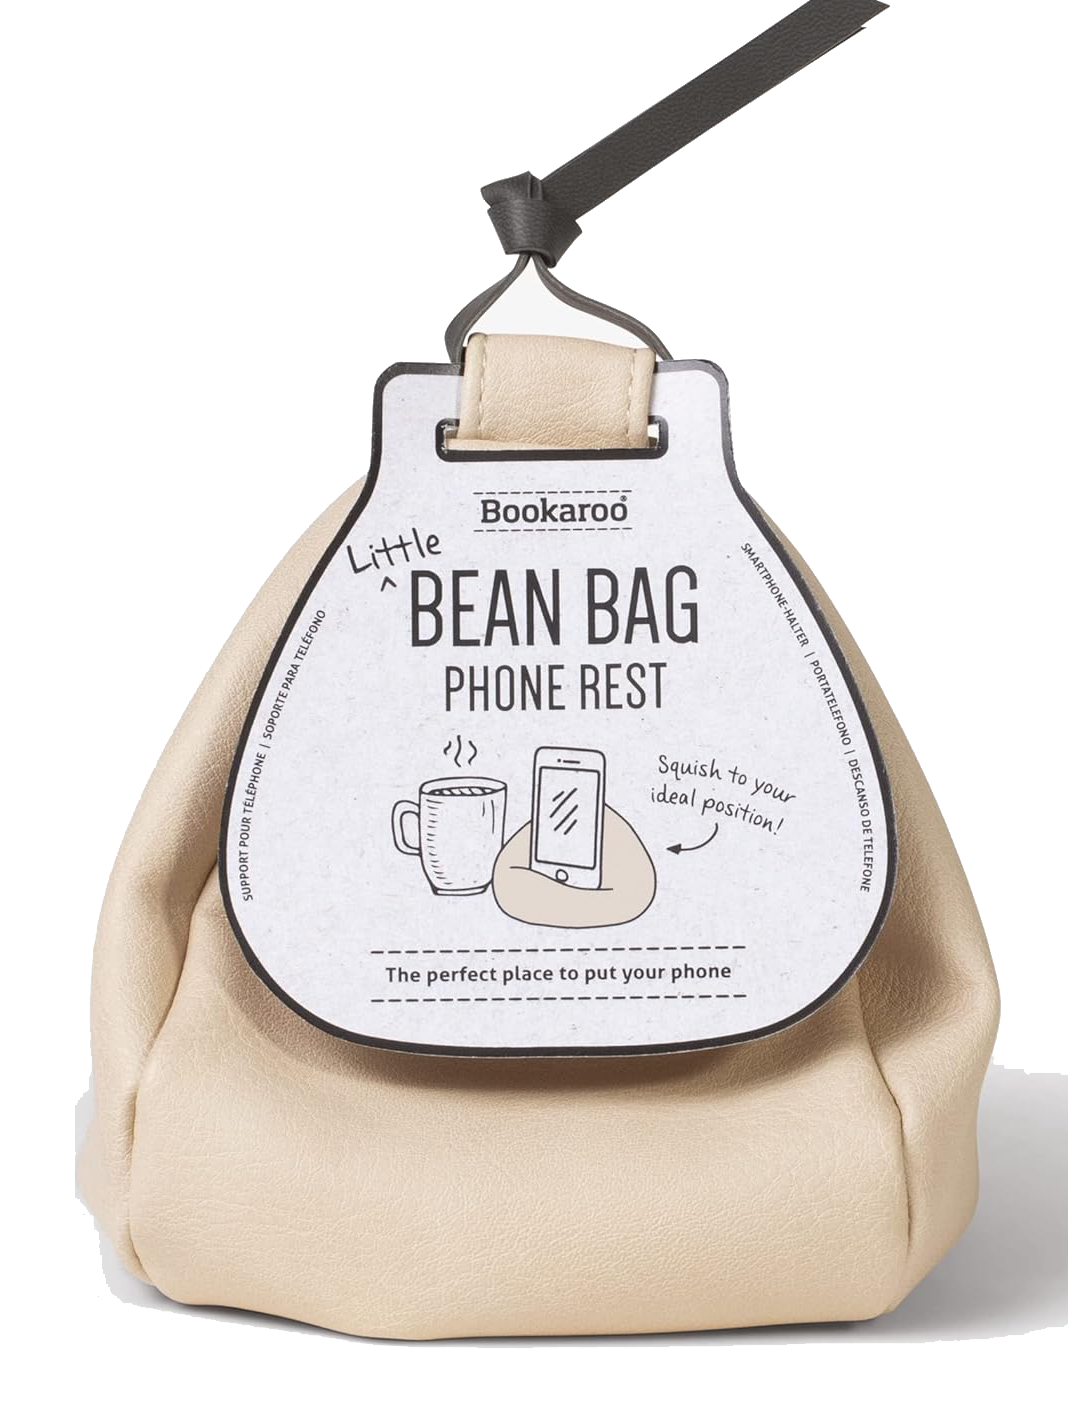 Suport pentru telefon - Bookaroo Bean Bag Phone Rest - Crem | If (That Company Called)